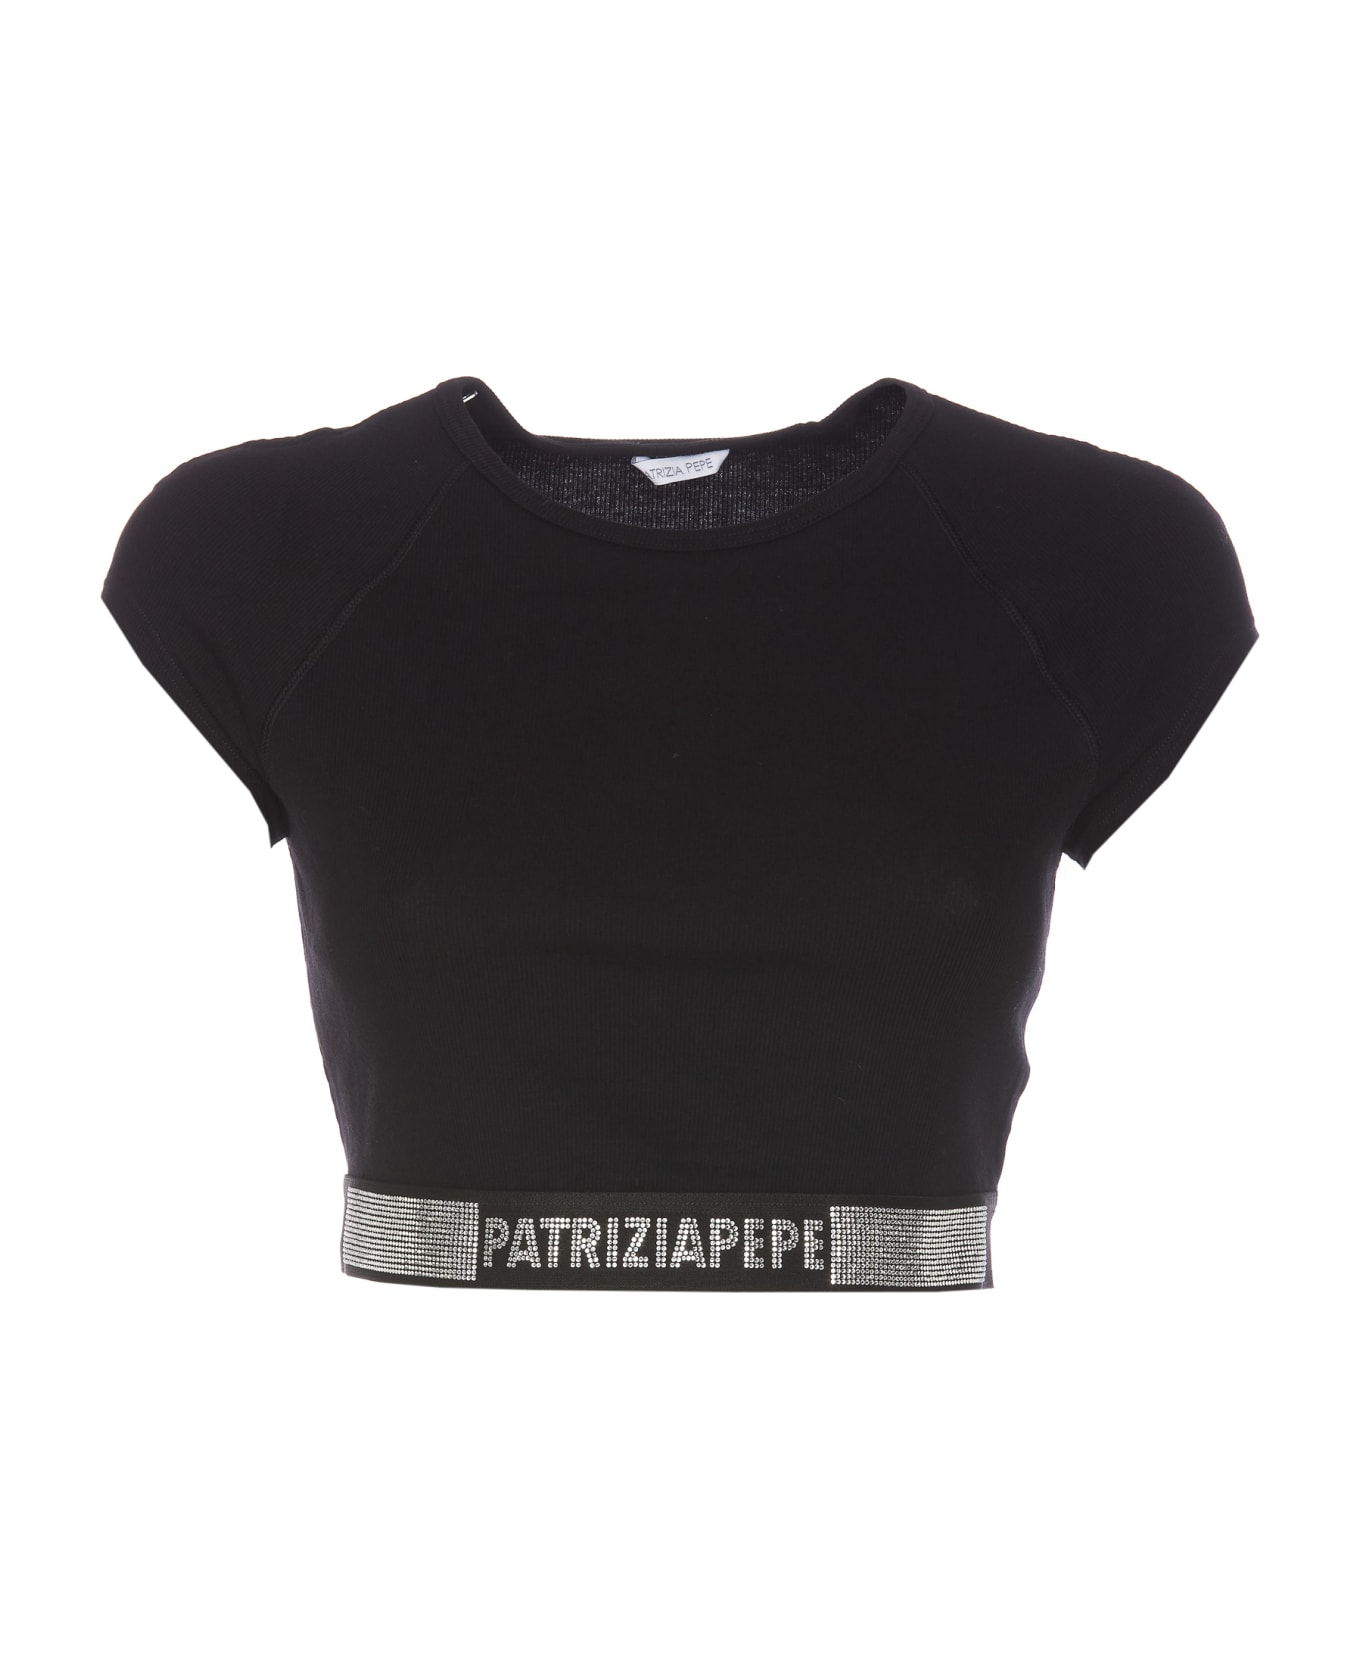 Patrizia Pepe Logo Top - Black